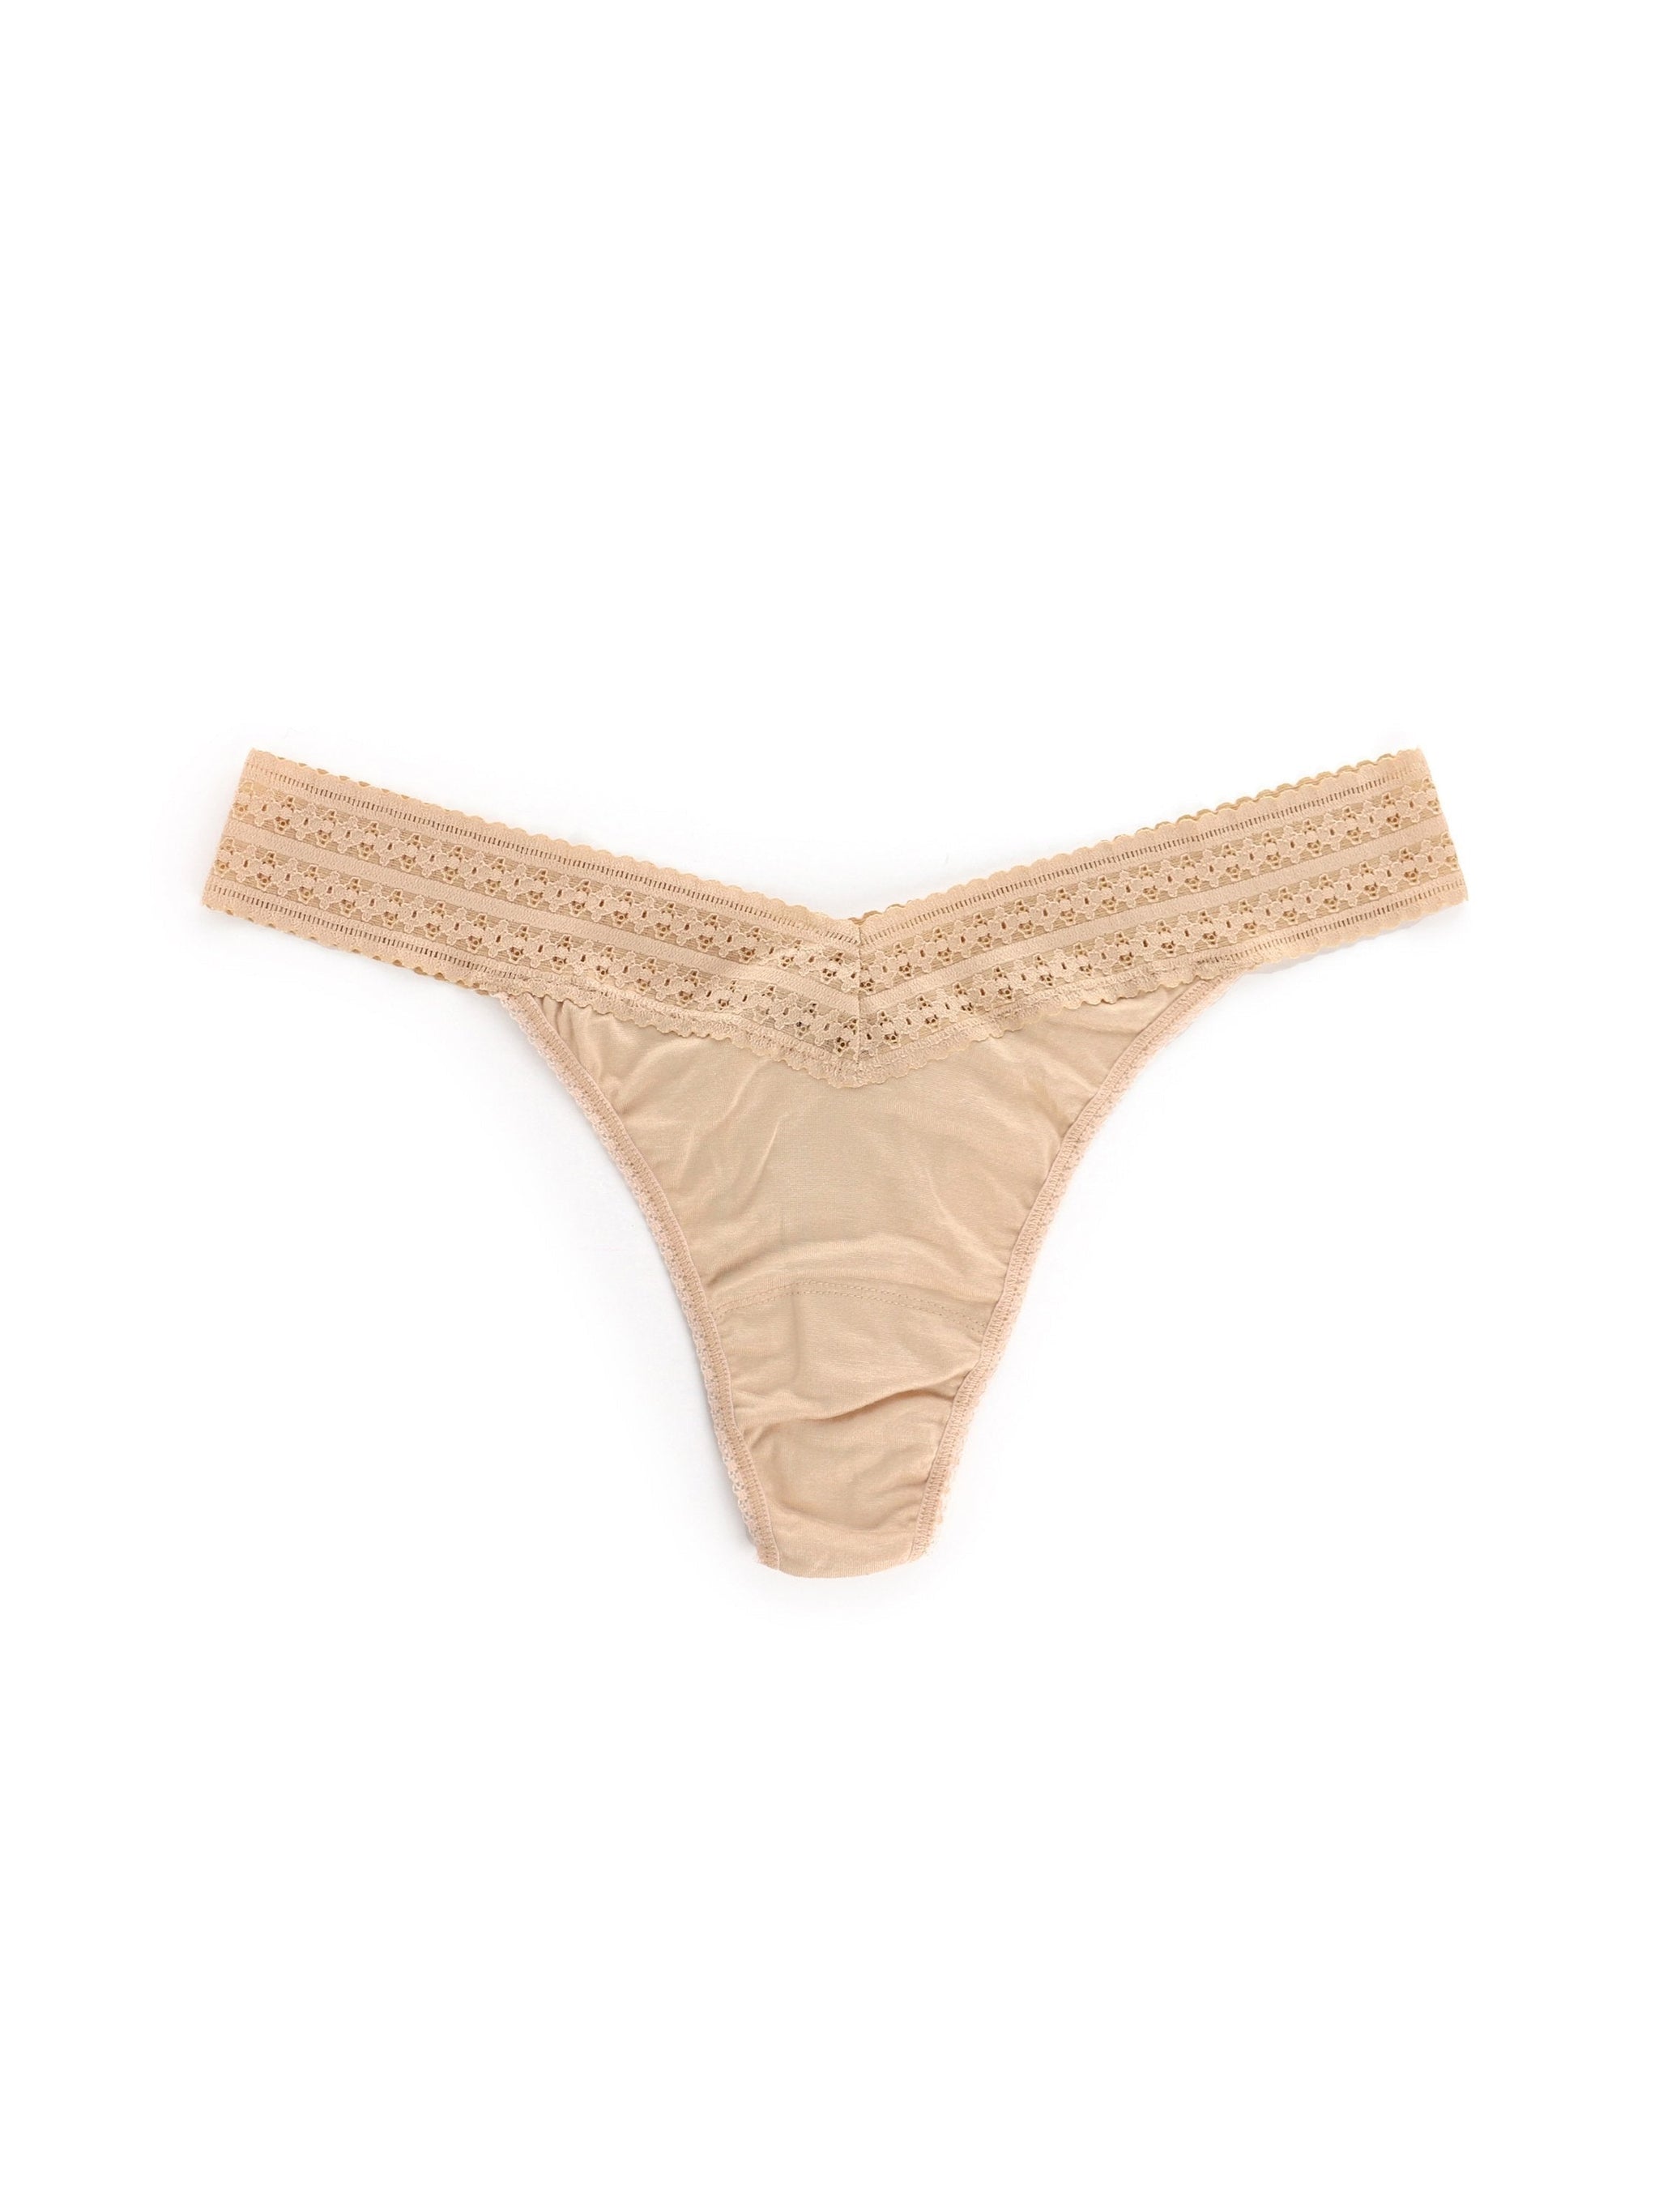 Wholesale Ladies' Plus-size Underwear in Canada